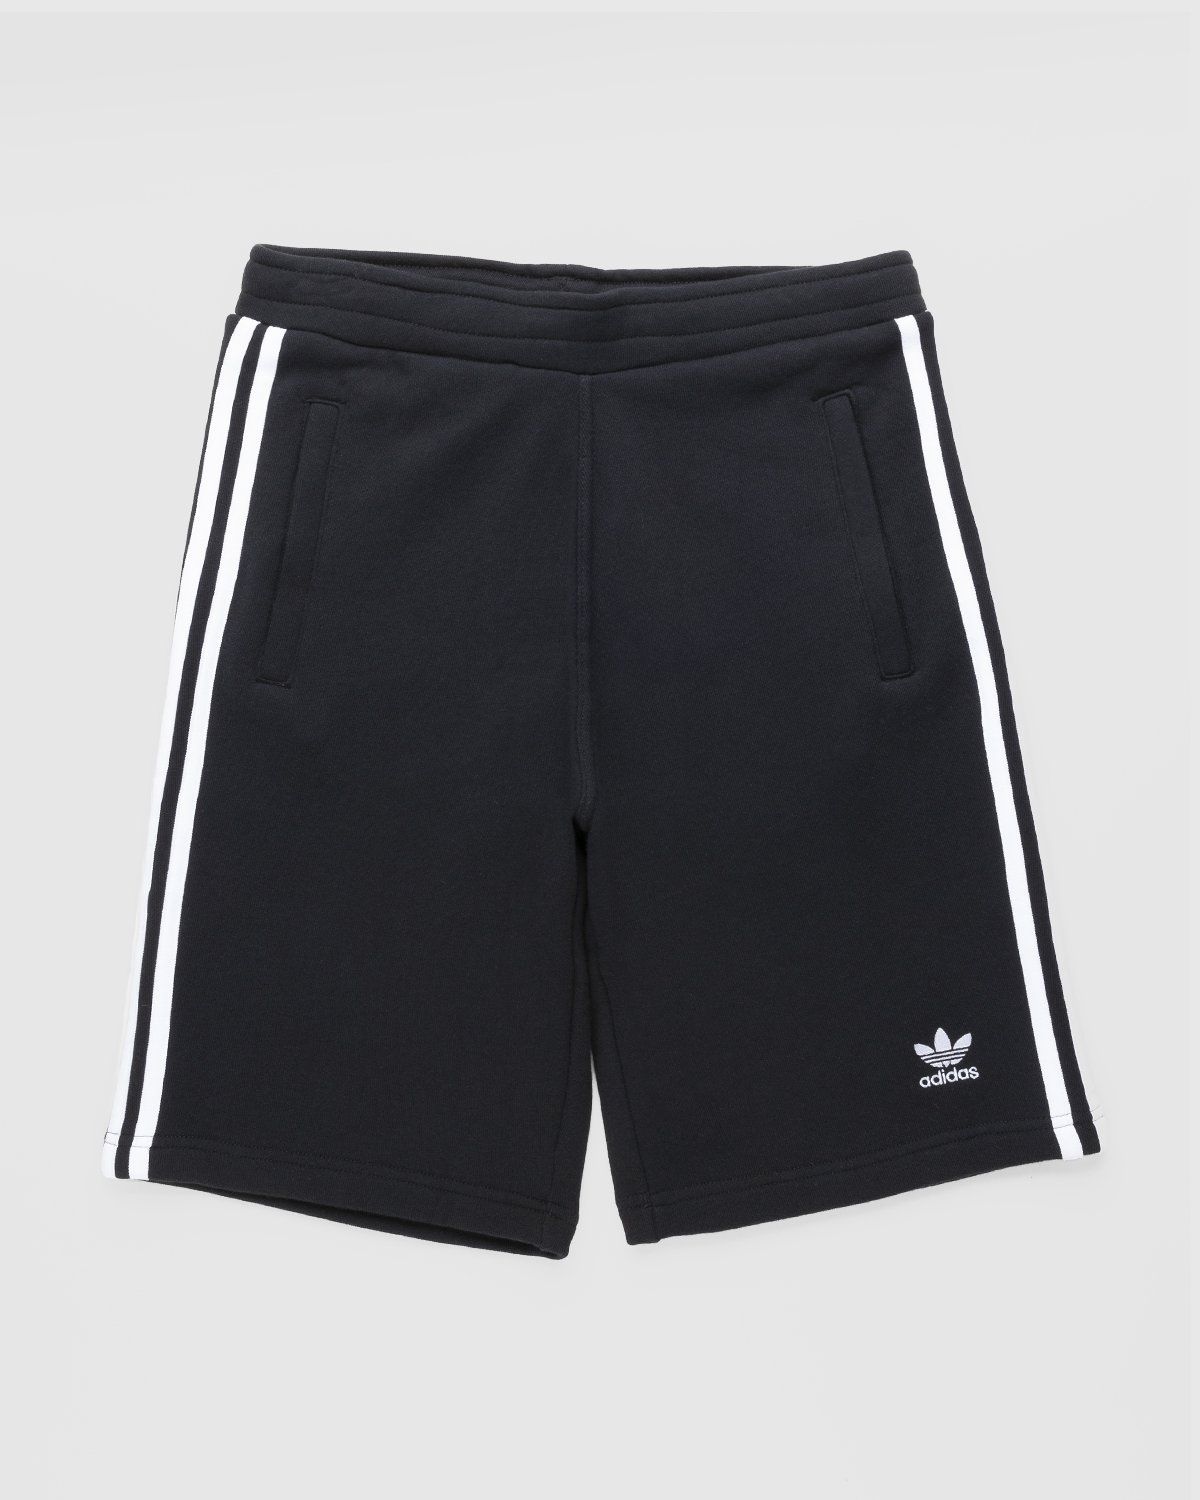 Adidas – 3 Stripe Short Black - Sweatshorts - Black - Image 1